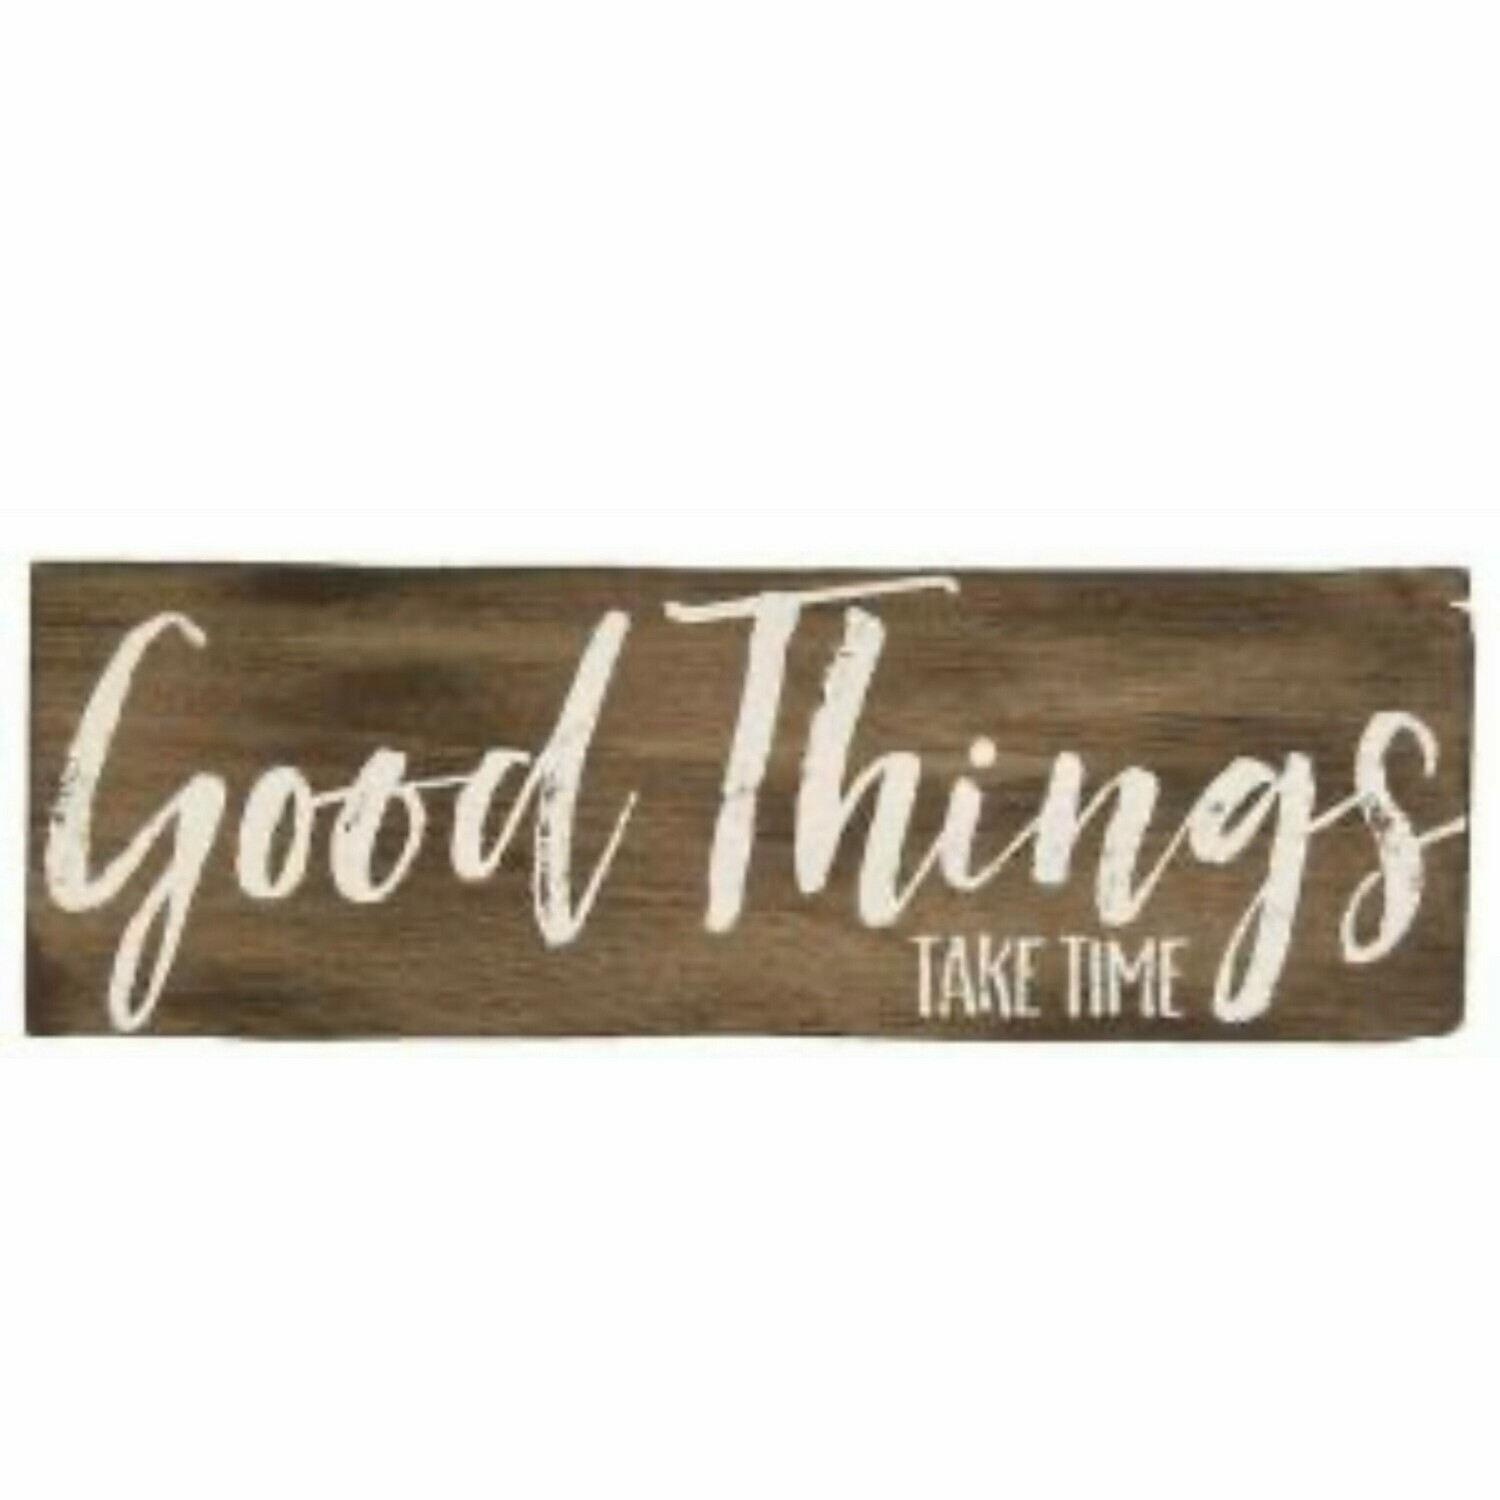 Good Things Take Time Wood Sign